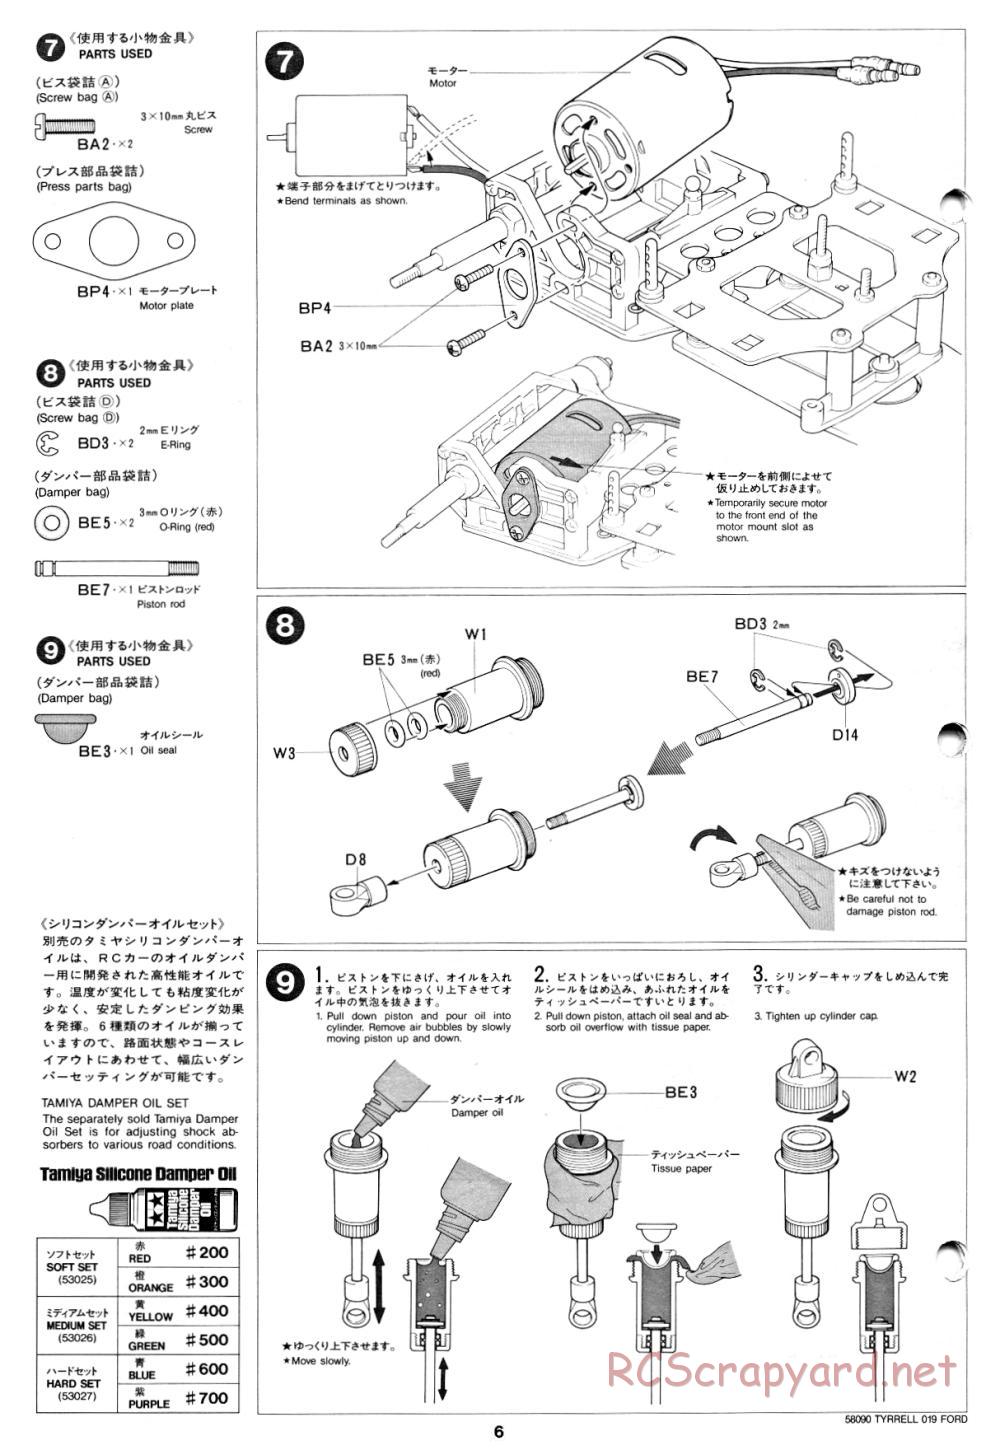 Tamiya - Tyrrell 019 Ford - 58090 - Manual - Page 6